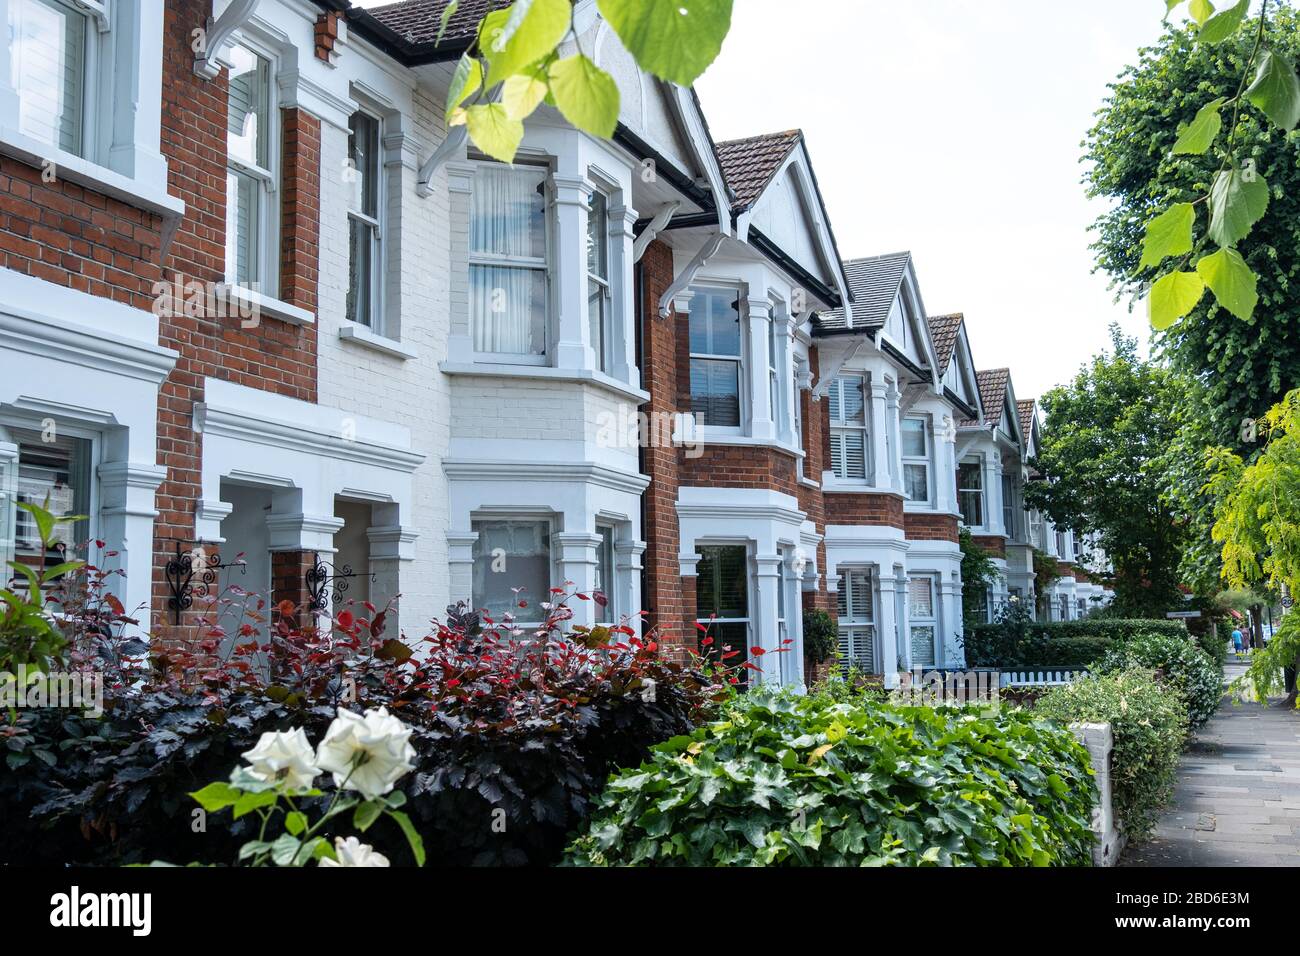 Strada di tipiche case a schiera - Londra UK Foto Stock